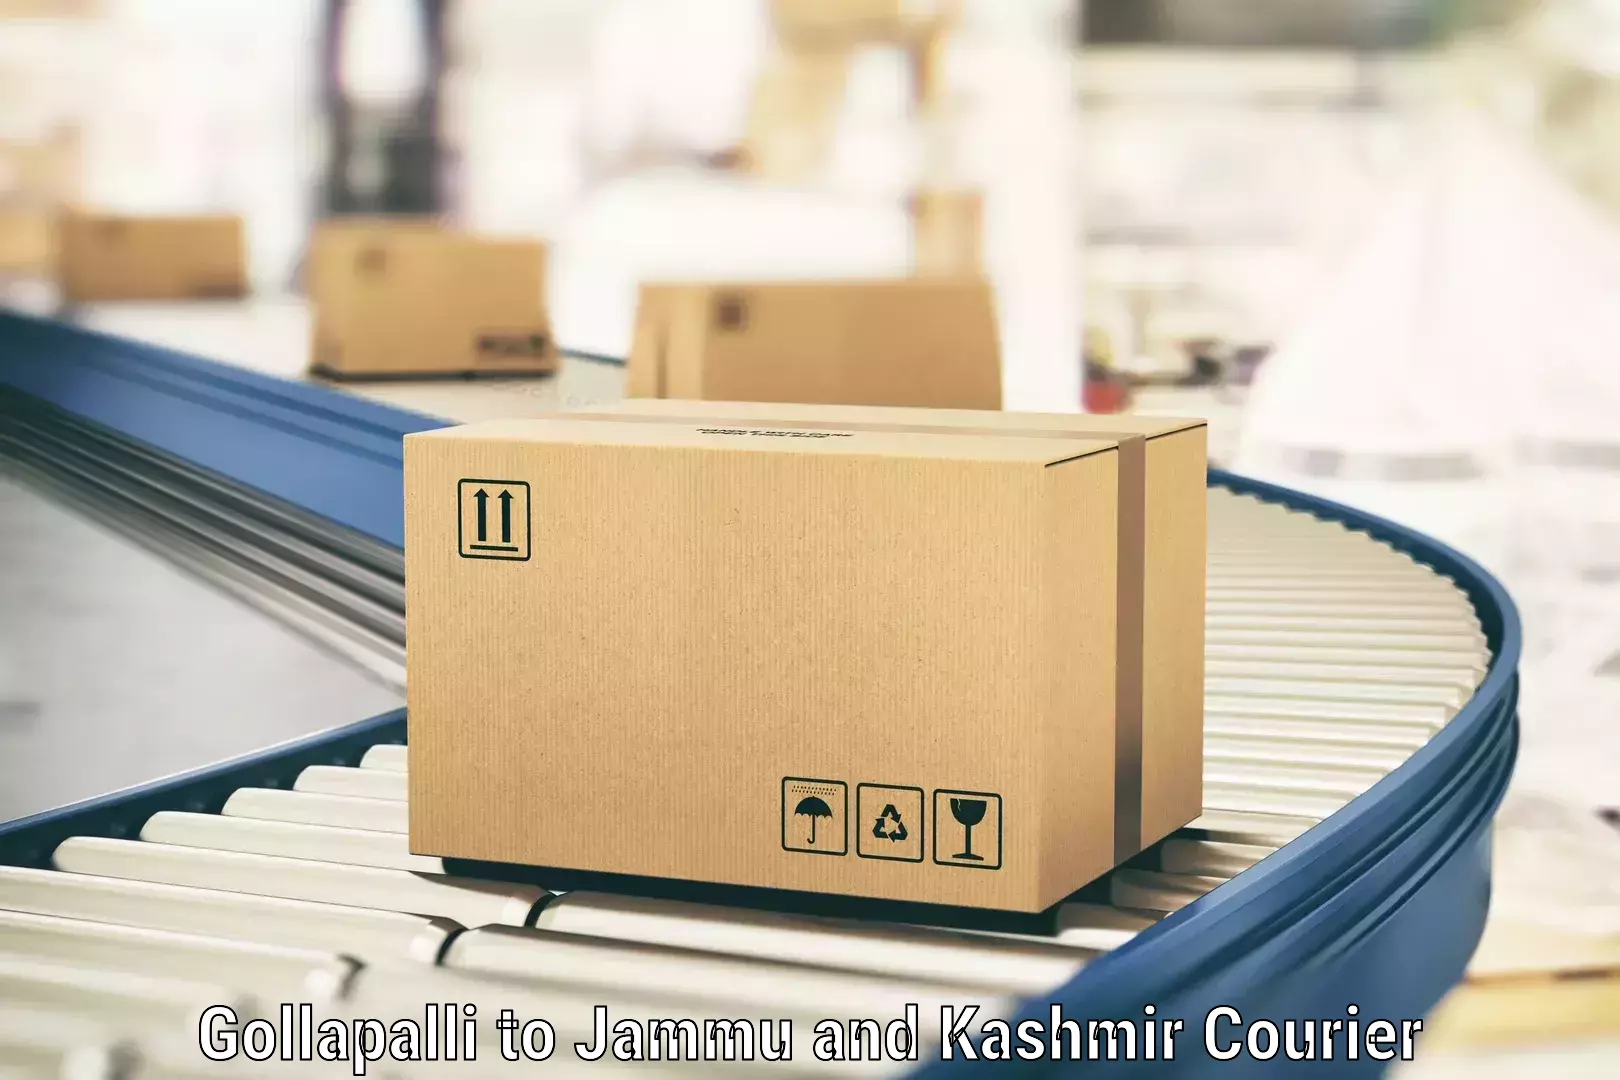 Efficient parcel tracking Gollapalli to Srinagar Kashmir